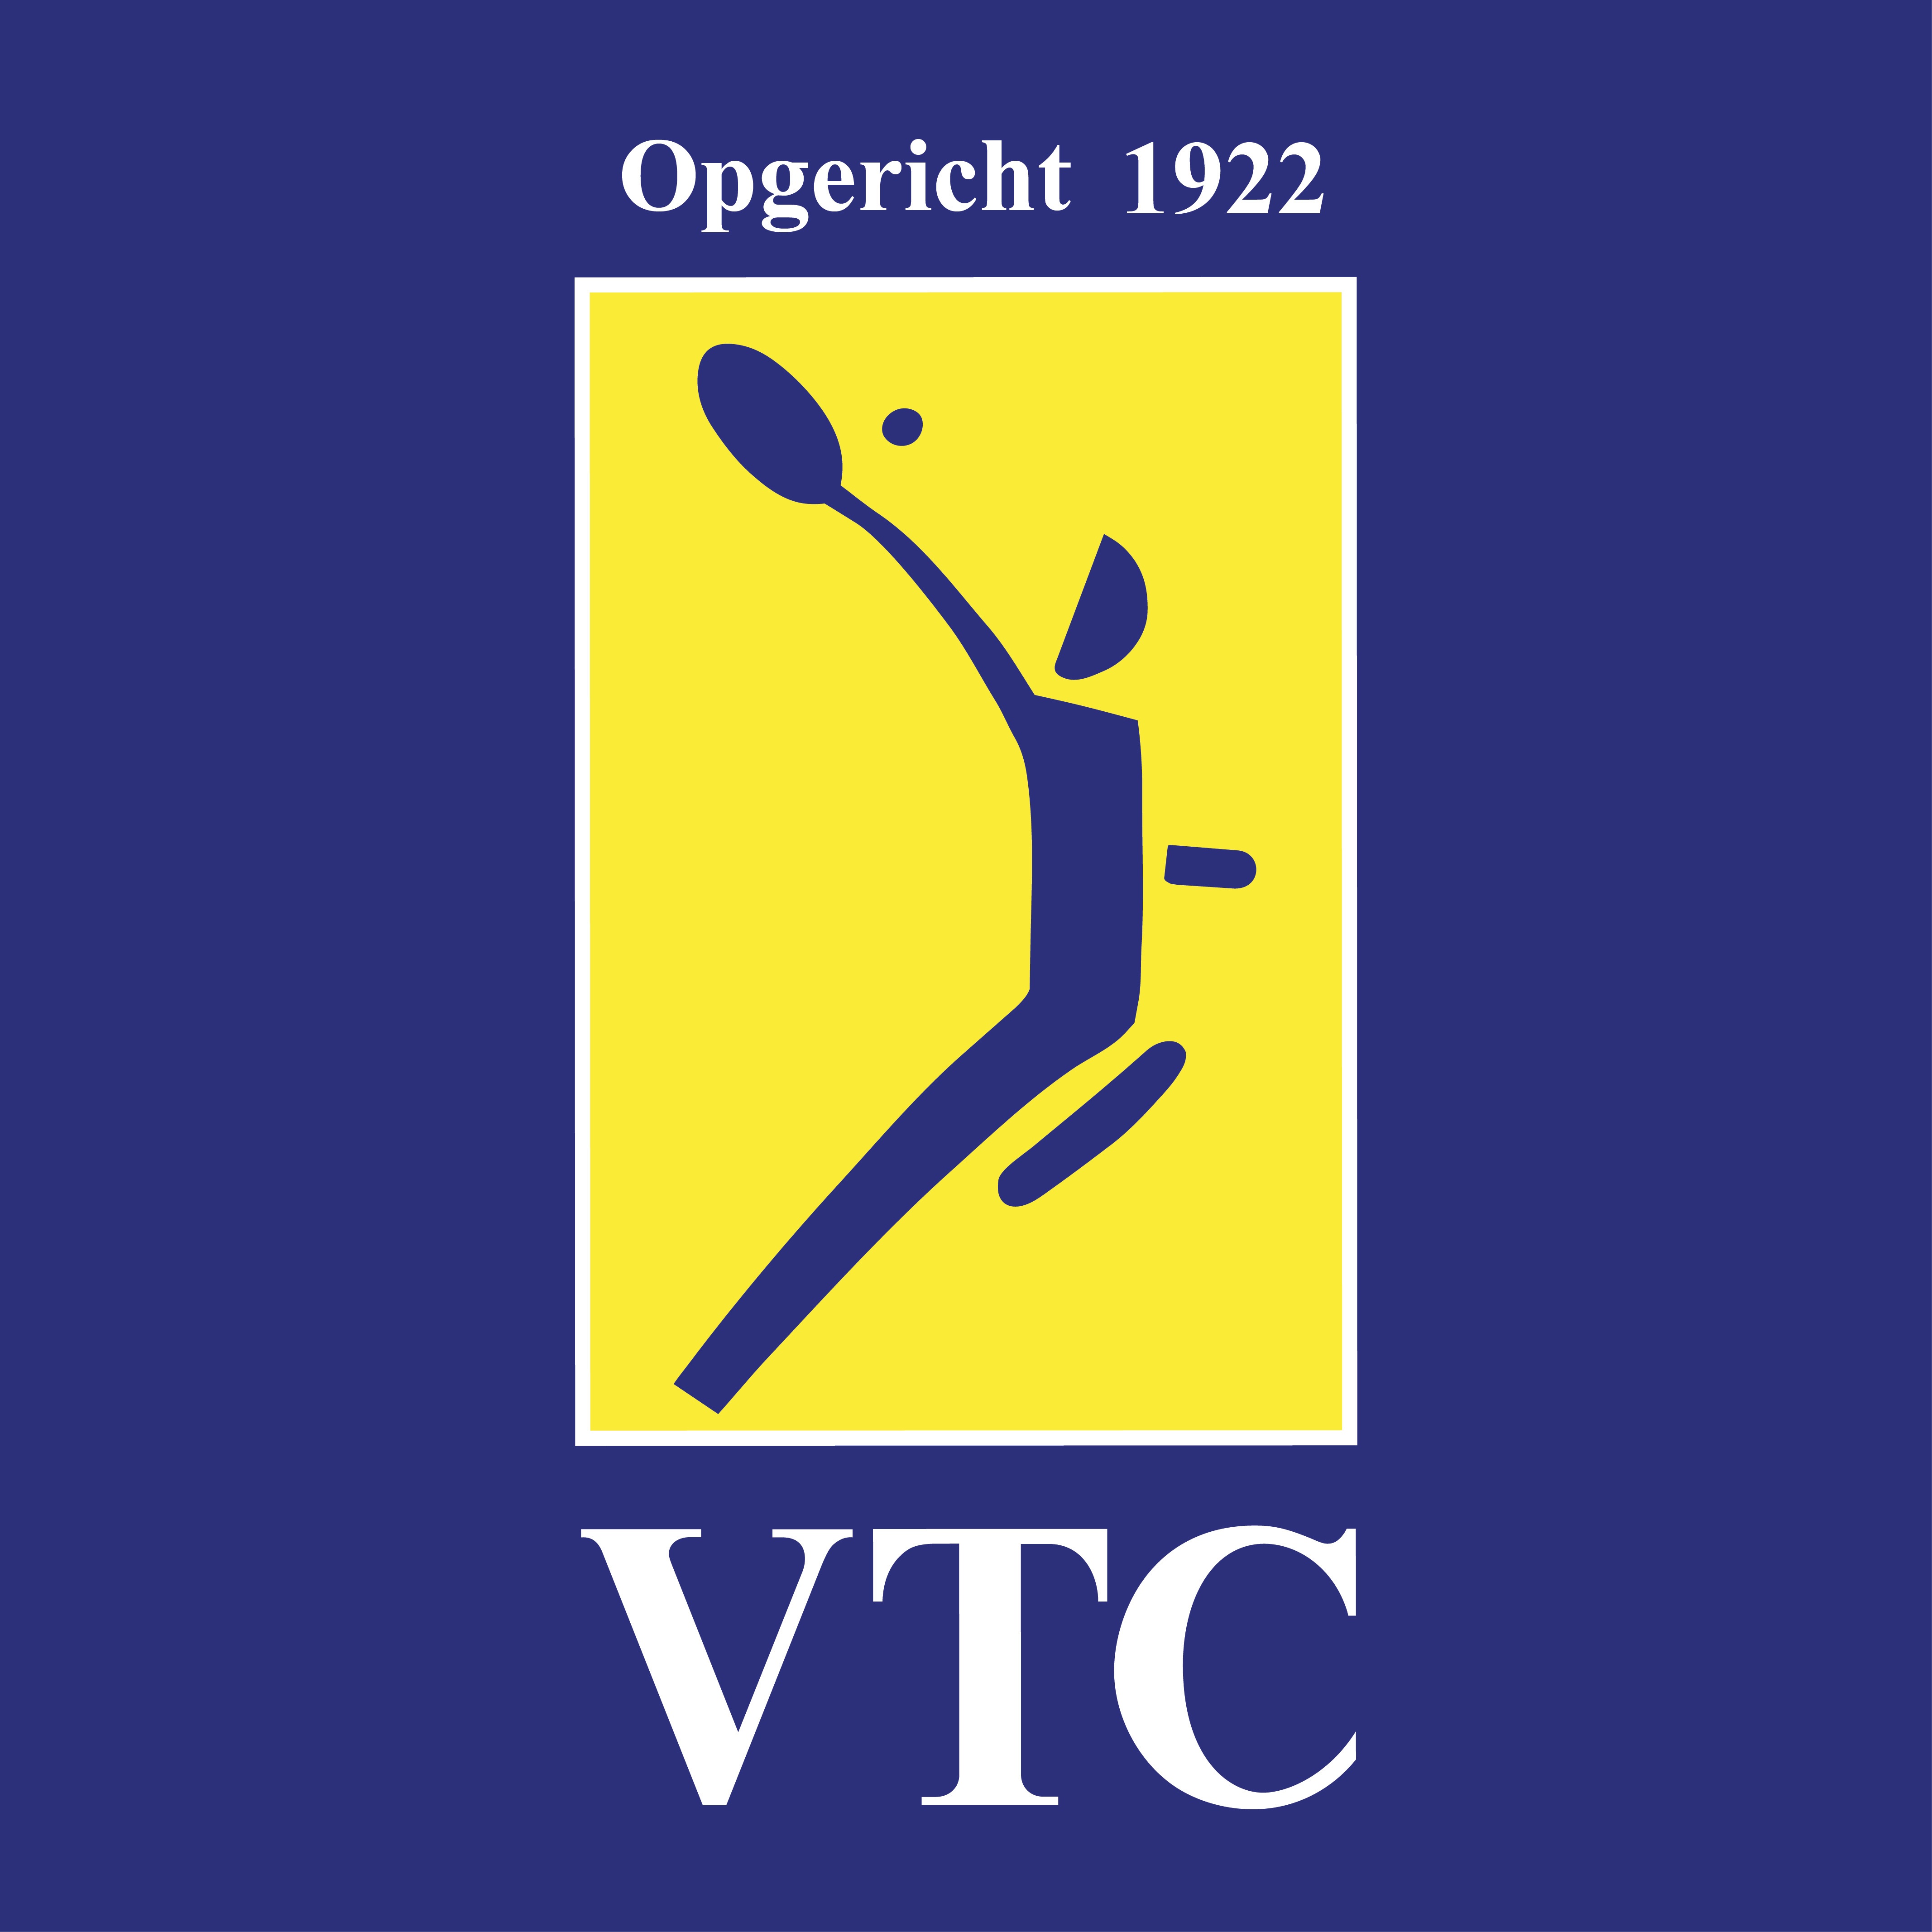 Profile image of venue VTC Veenendaal